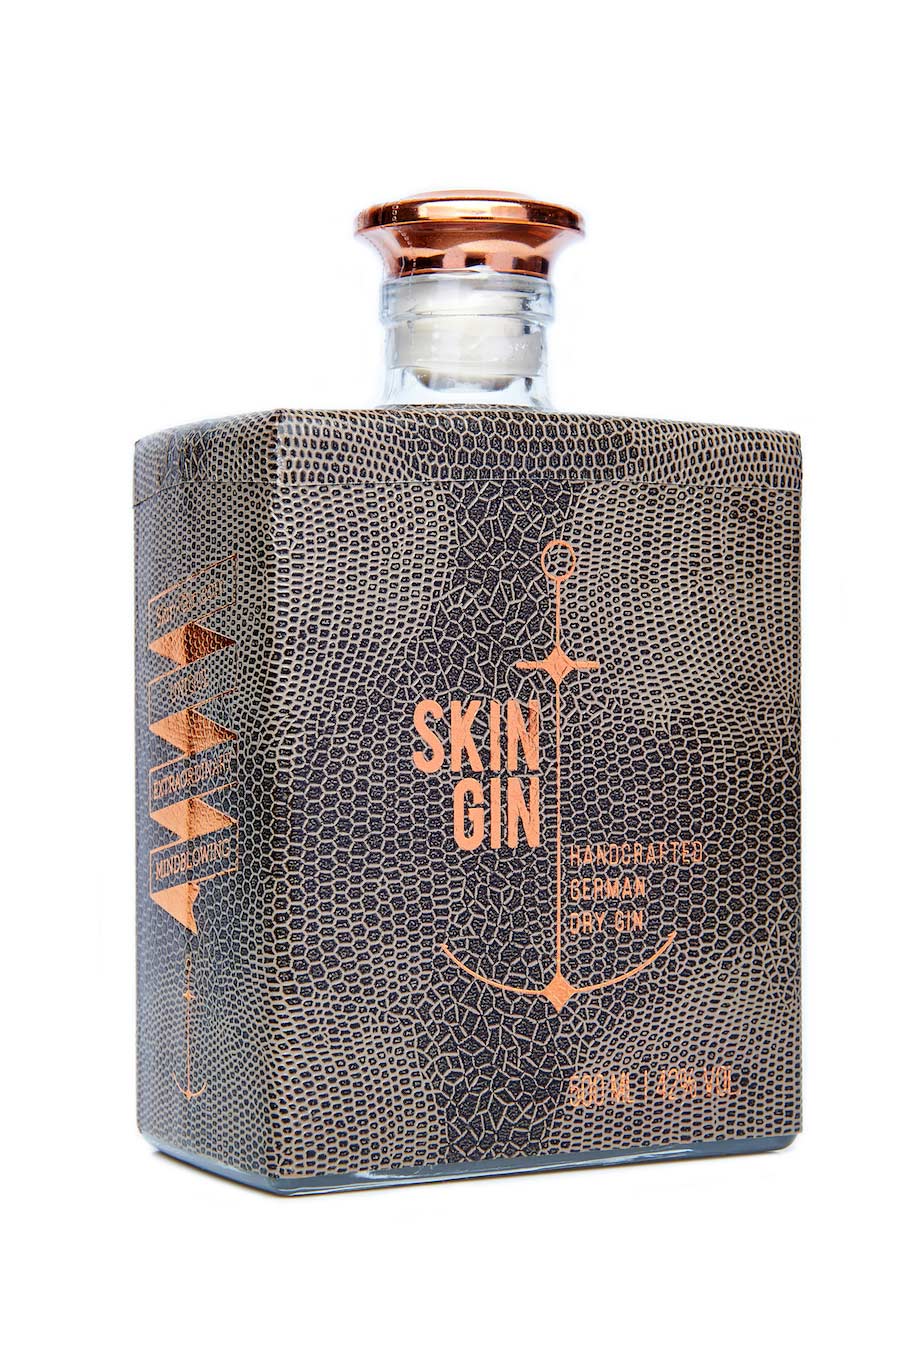 Skin Gin Reptile Edition